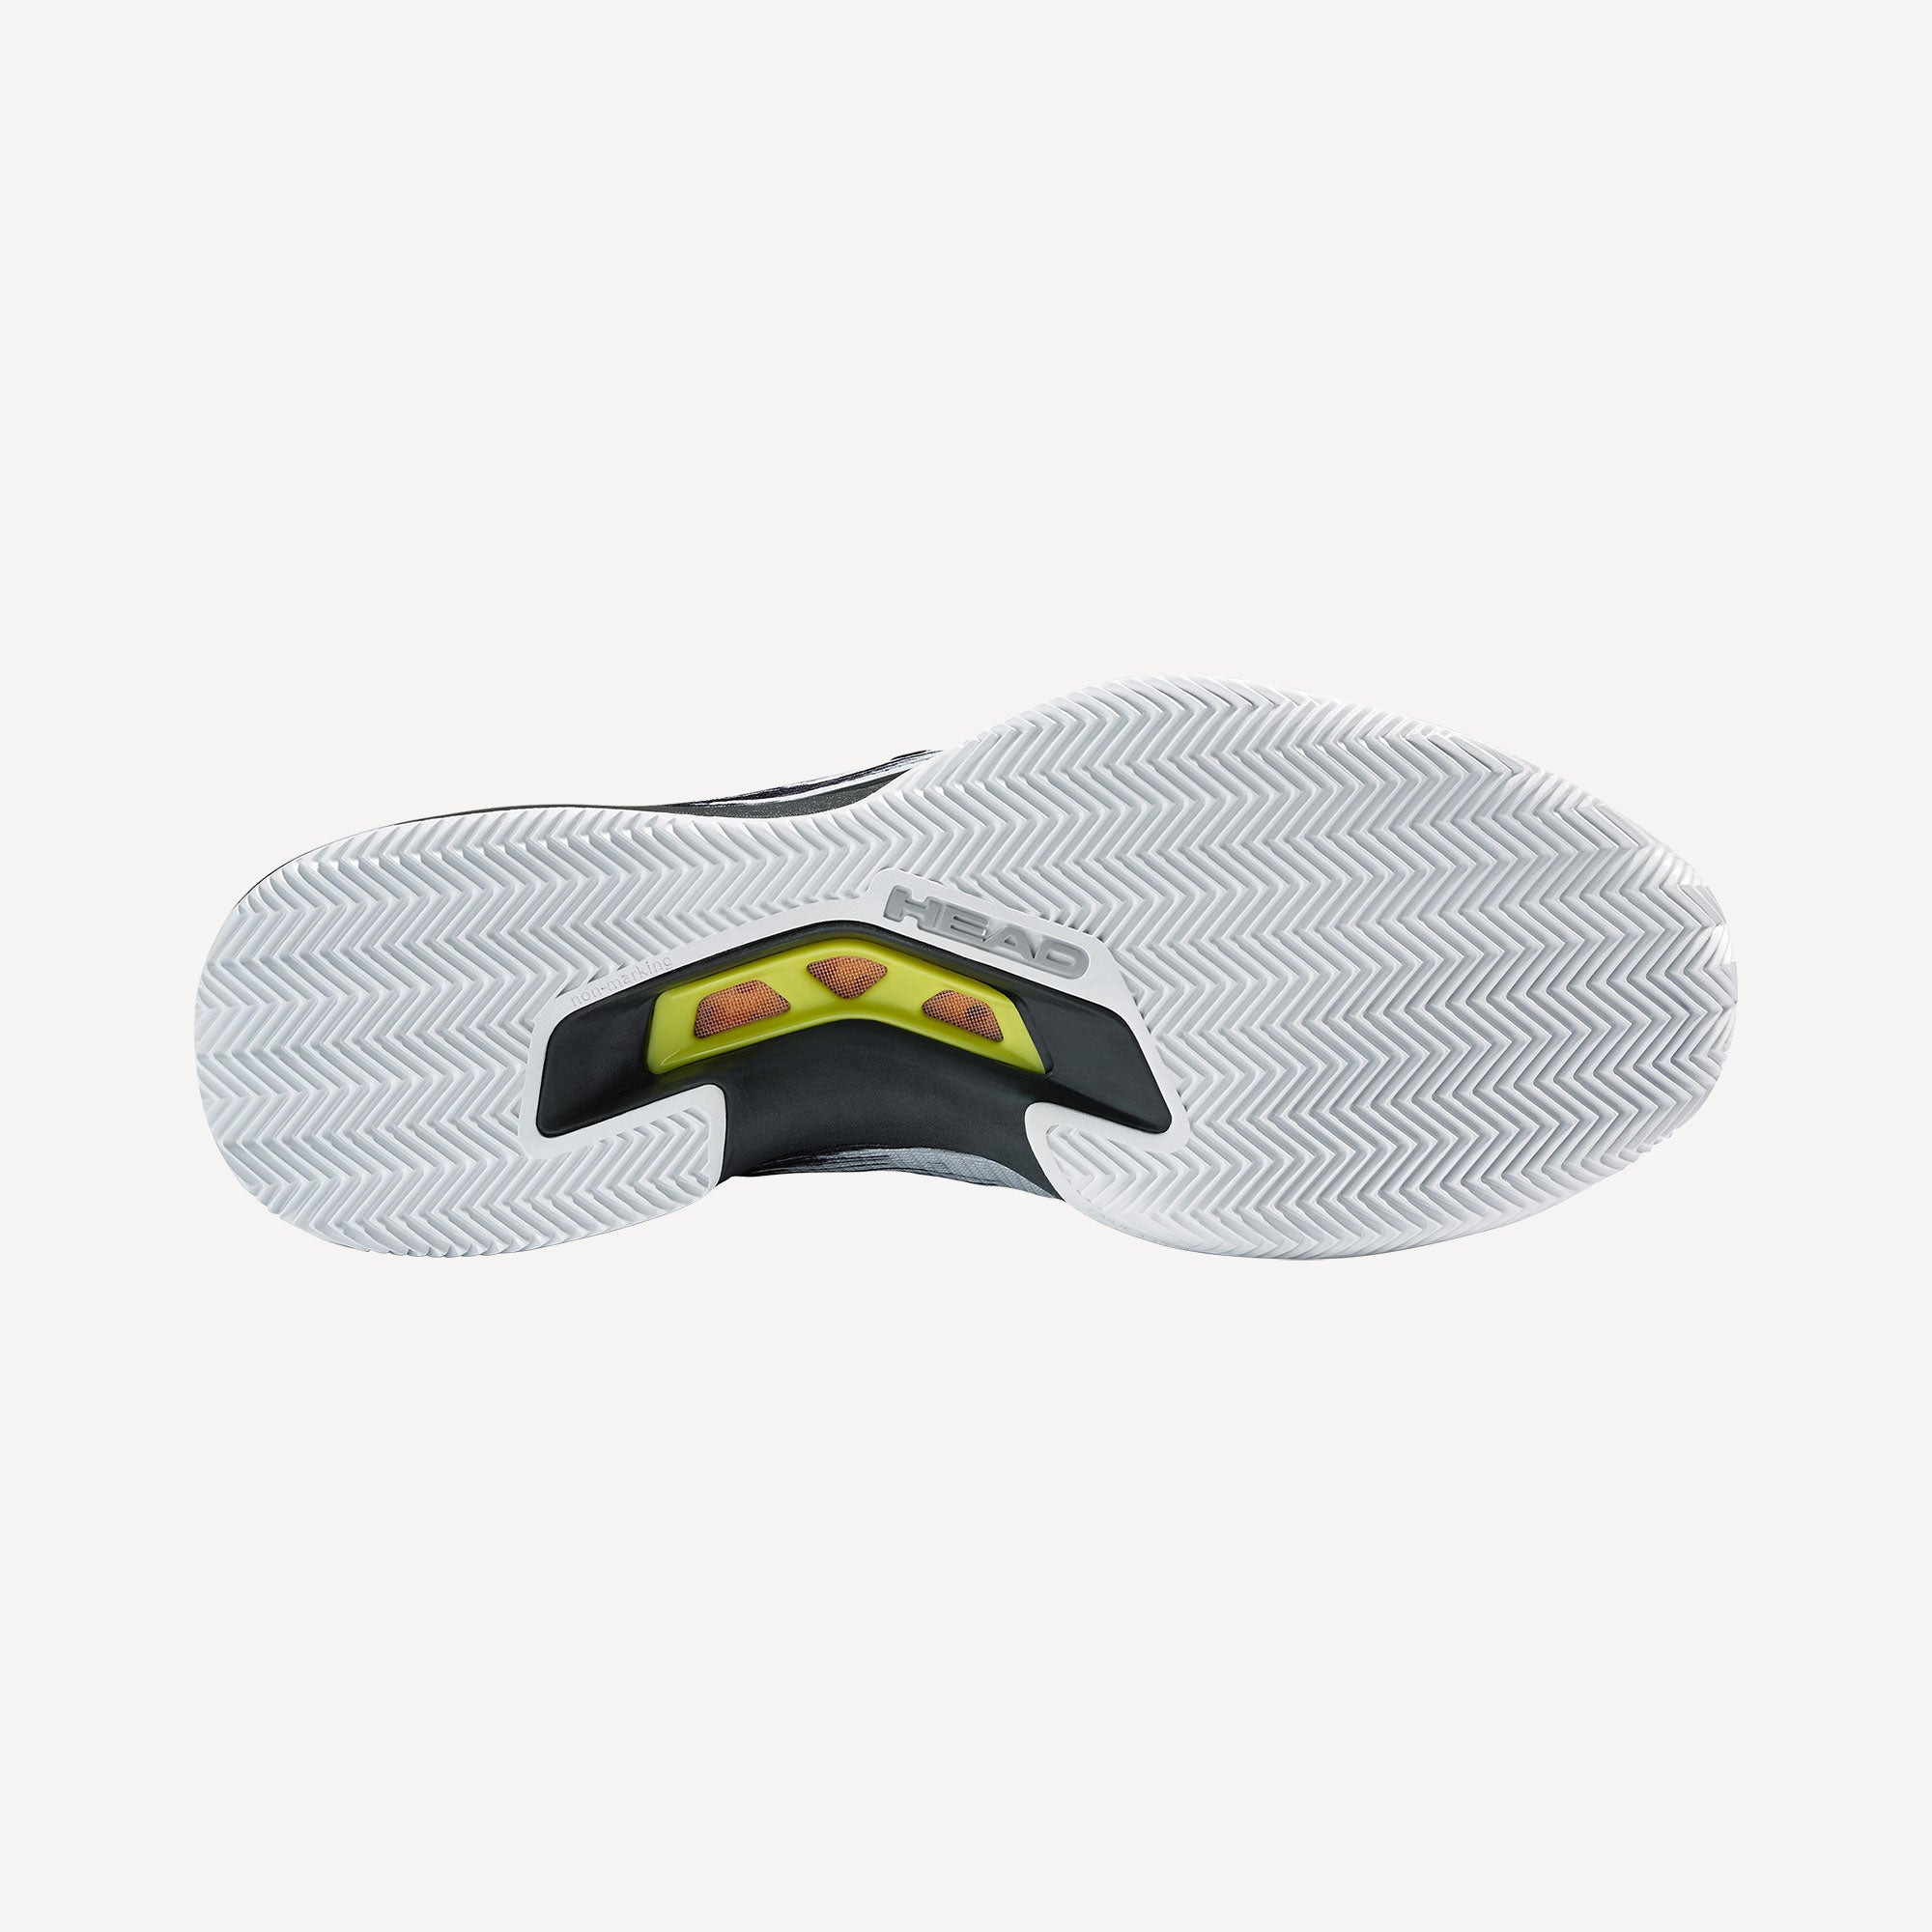 HEAD Sprint 3.0 Men's Clay Court Tennis Shoes White (2)